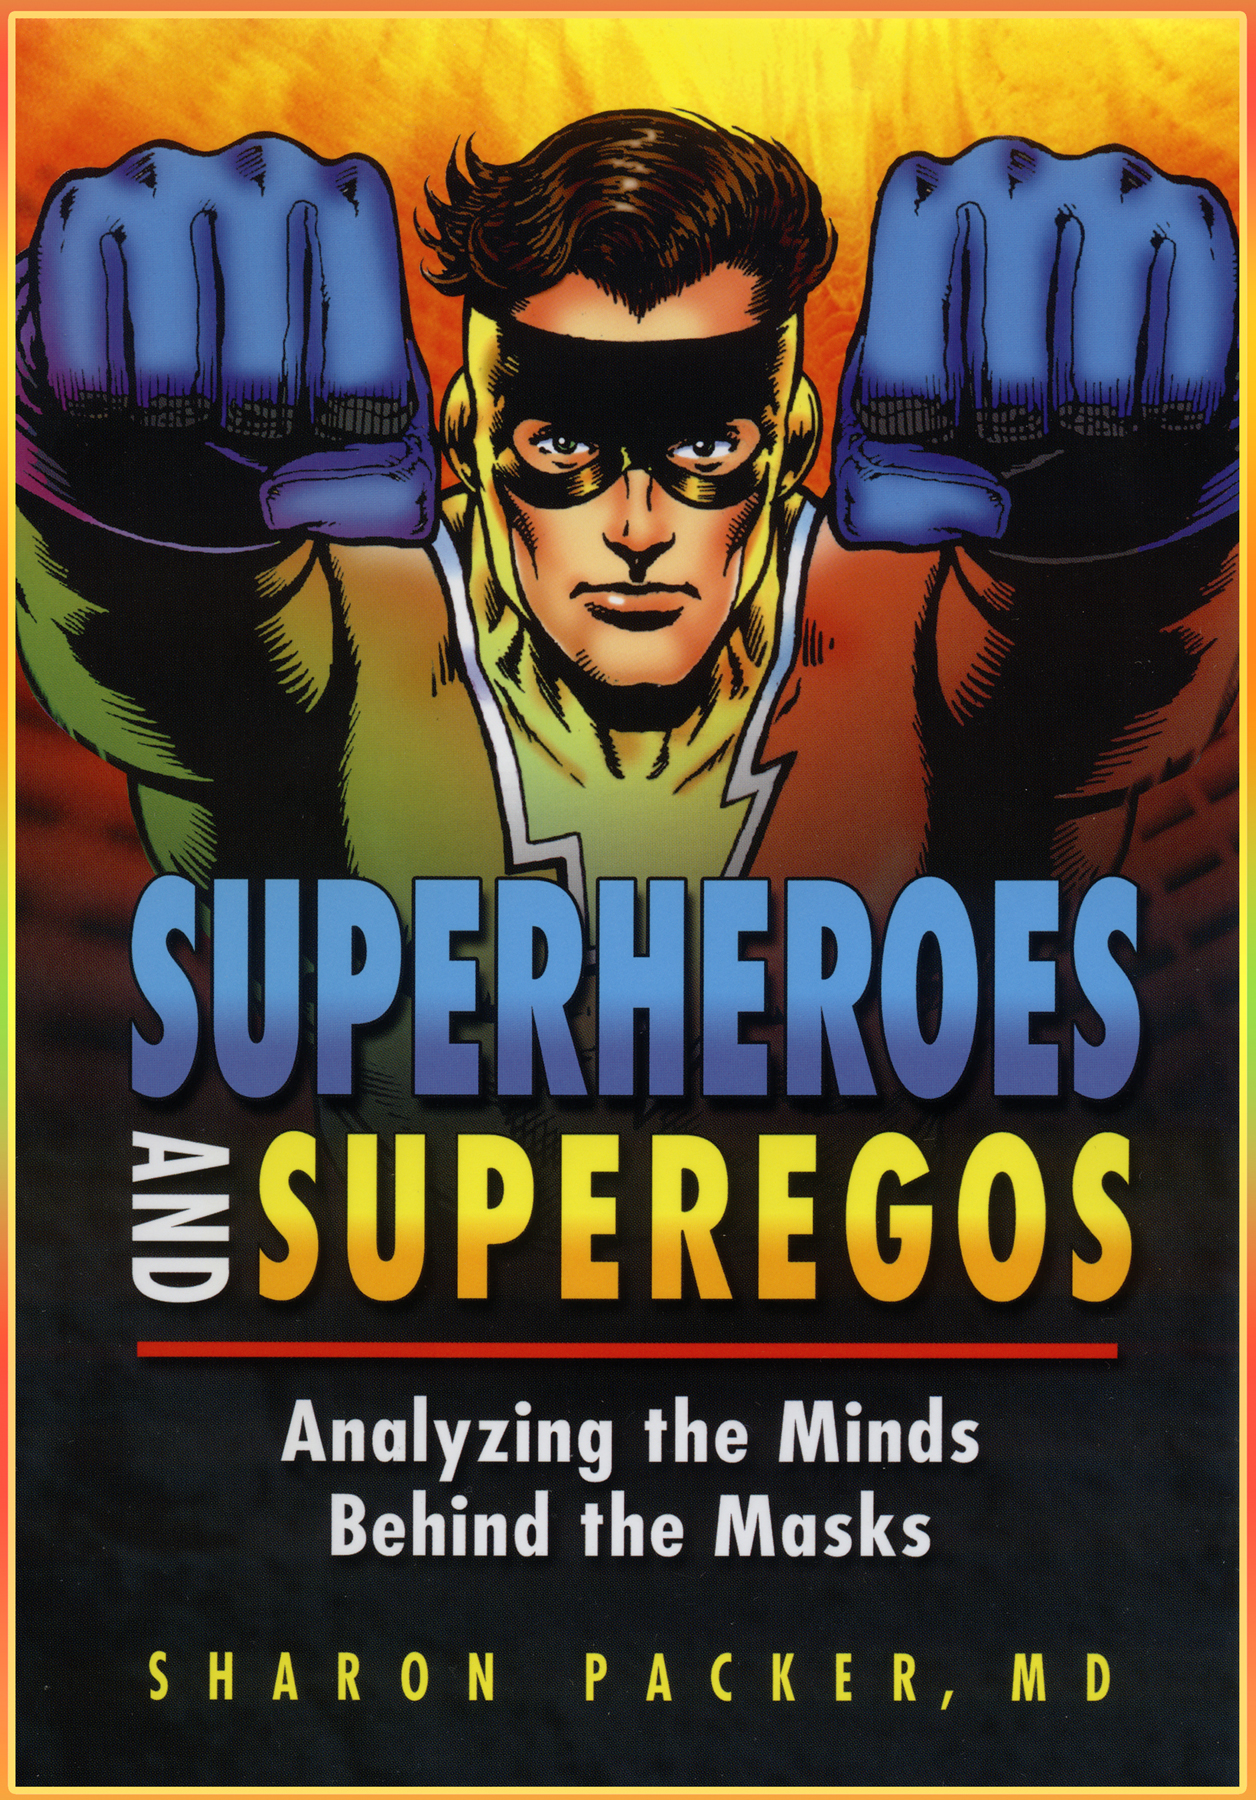 Superheroes & Superegos: Analyzing the Minds behind the Masks